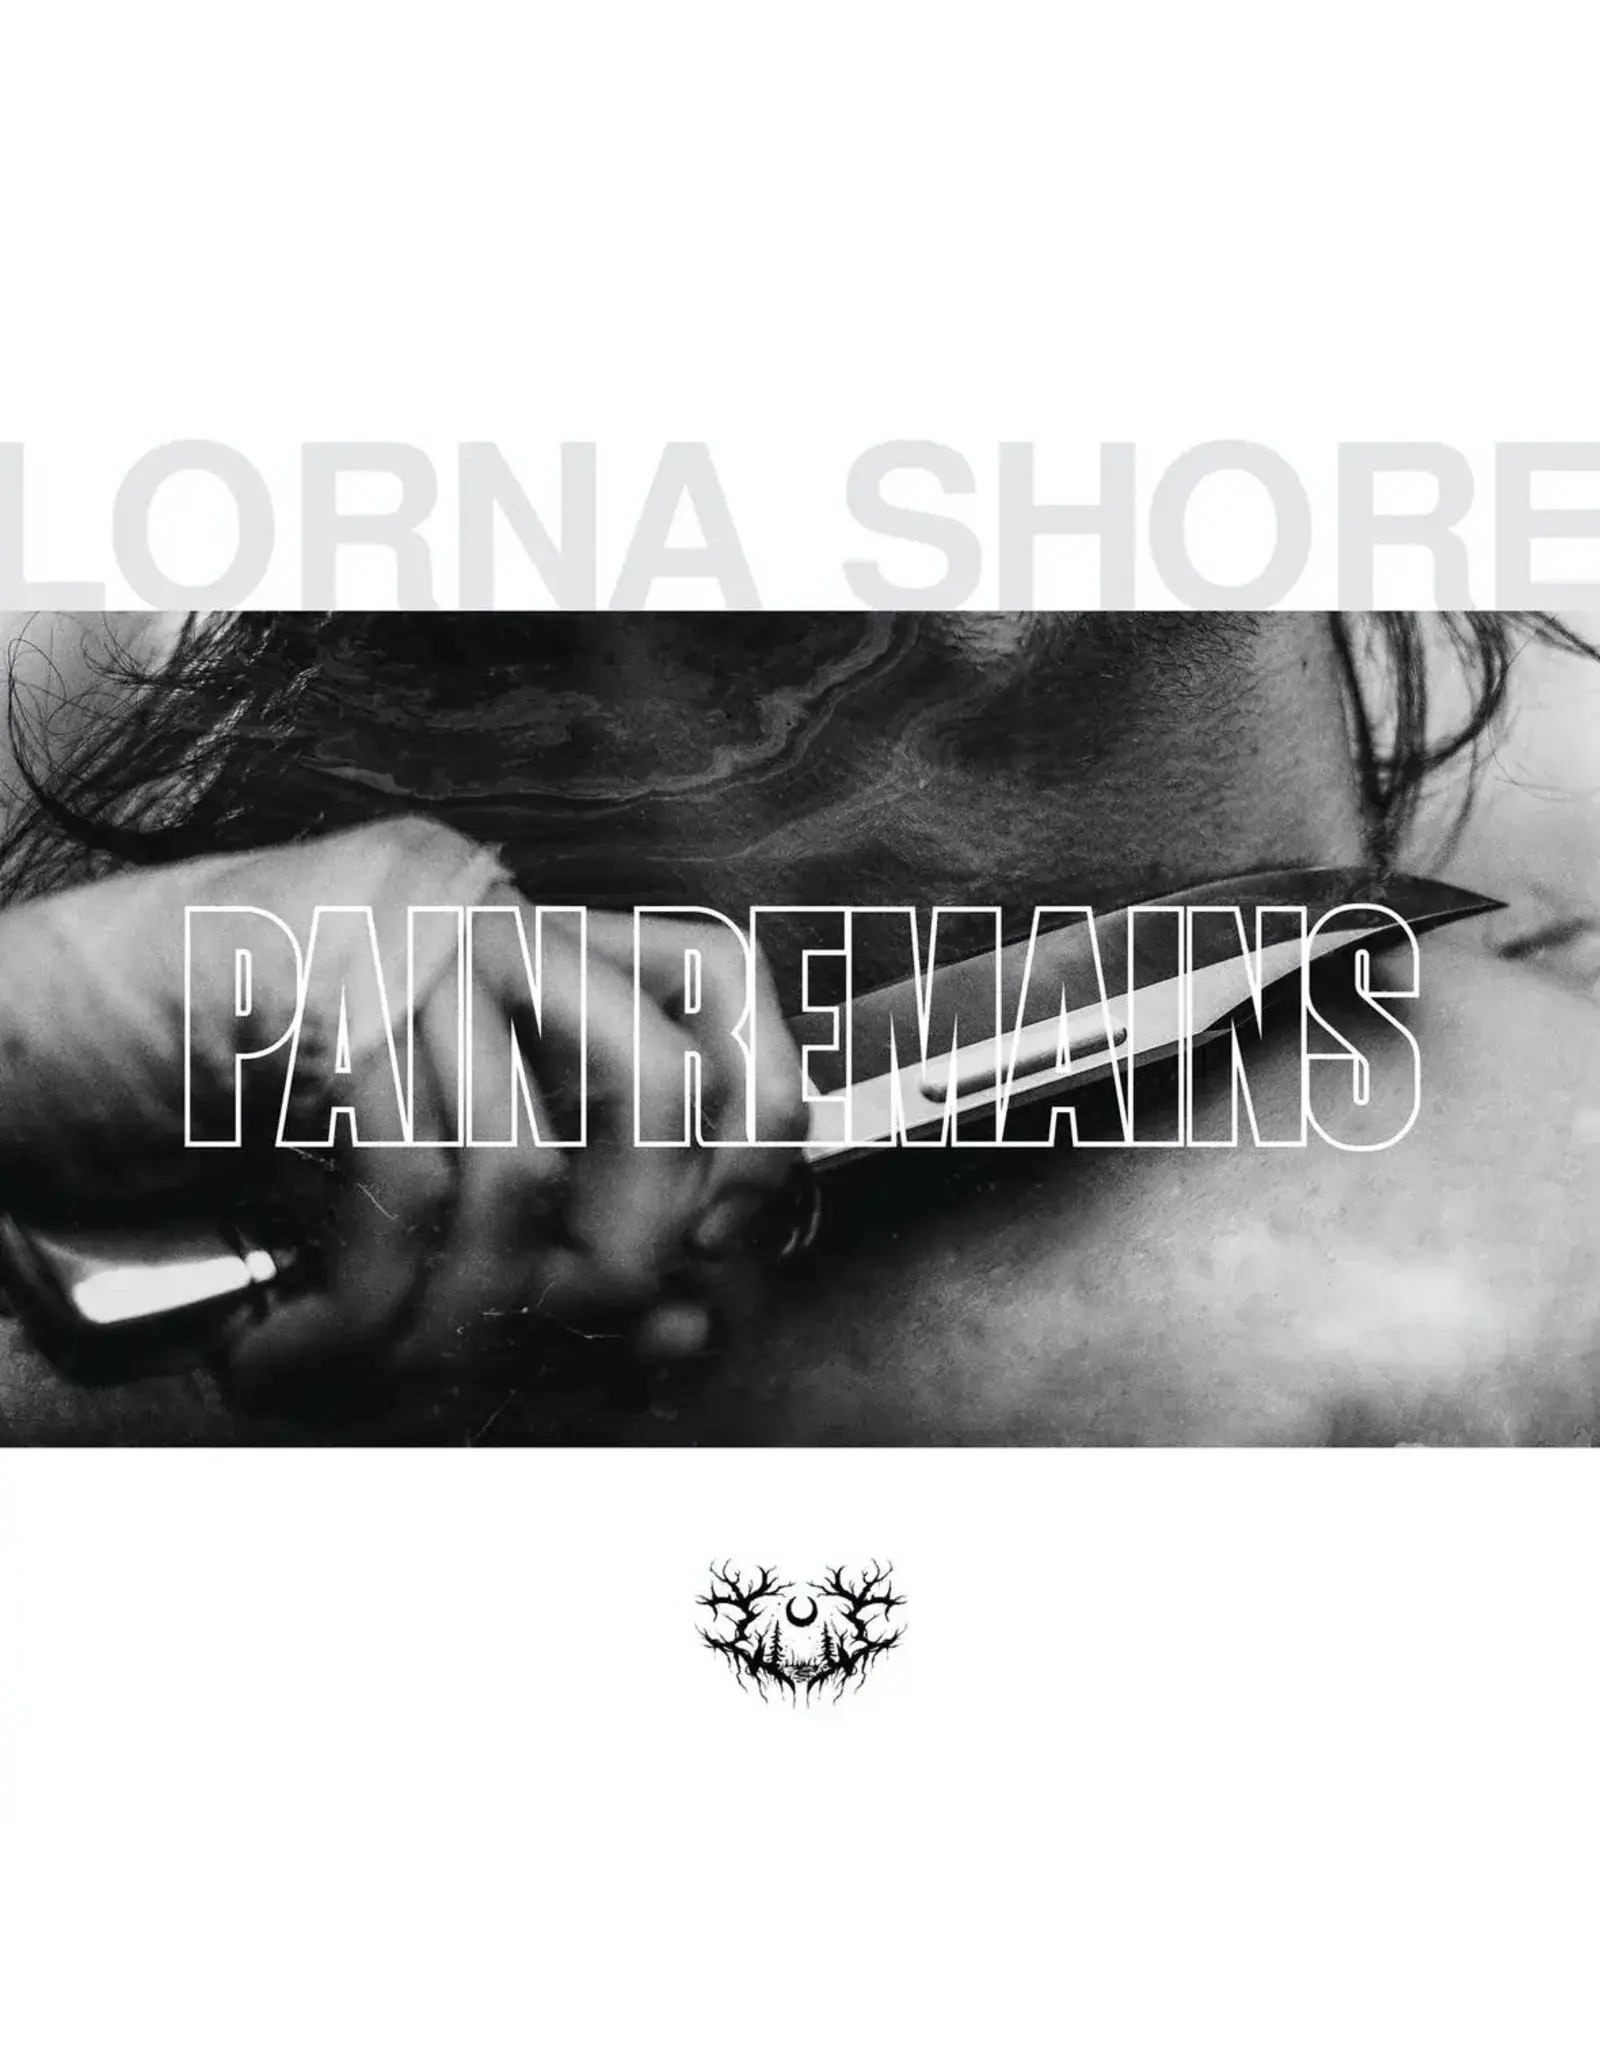 Lorna Shore - Pain Remains (Black Ice Vinyl)